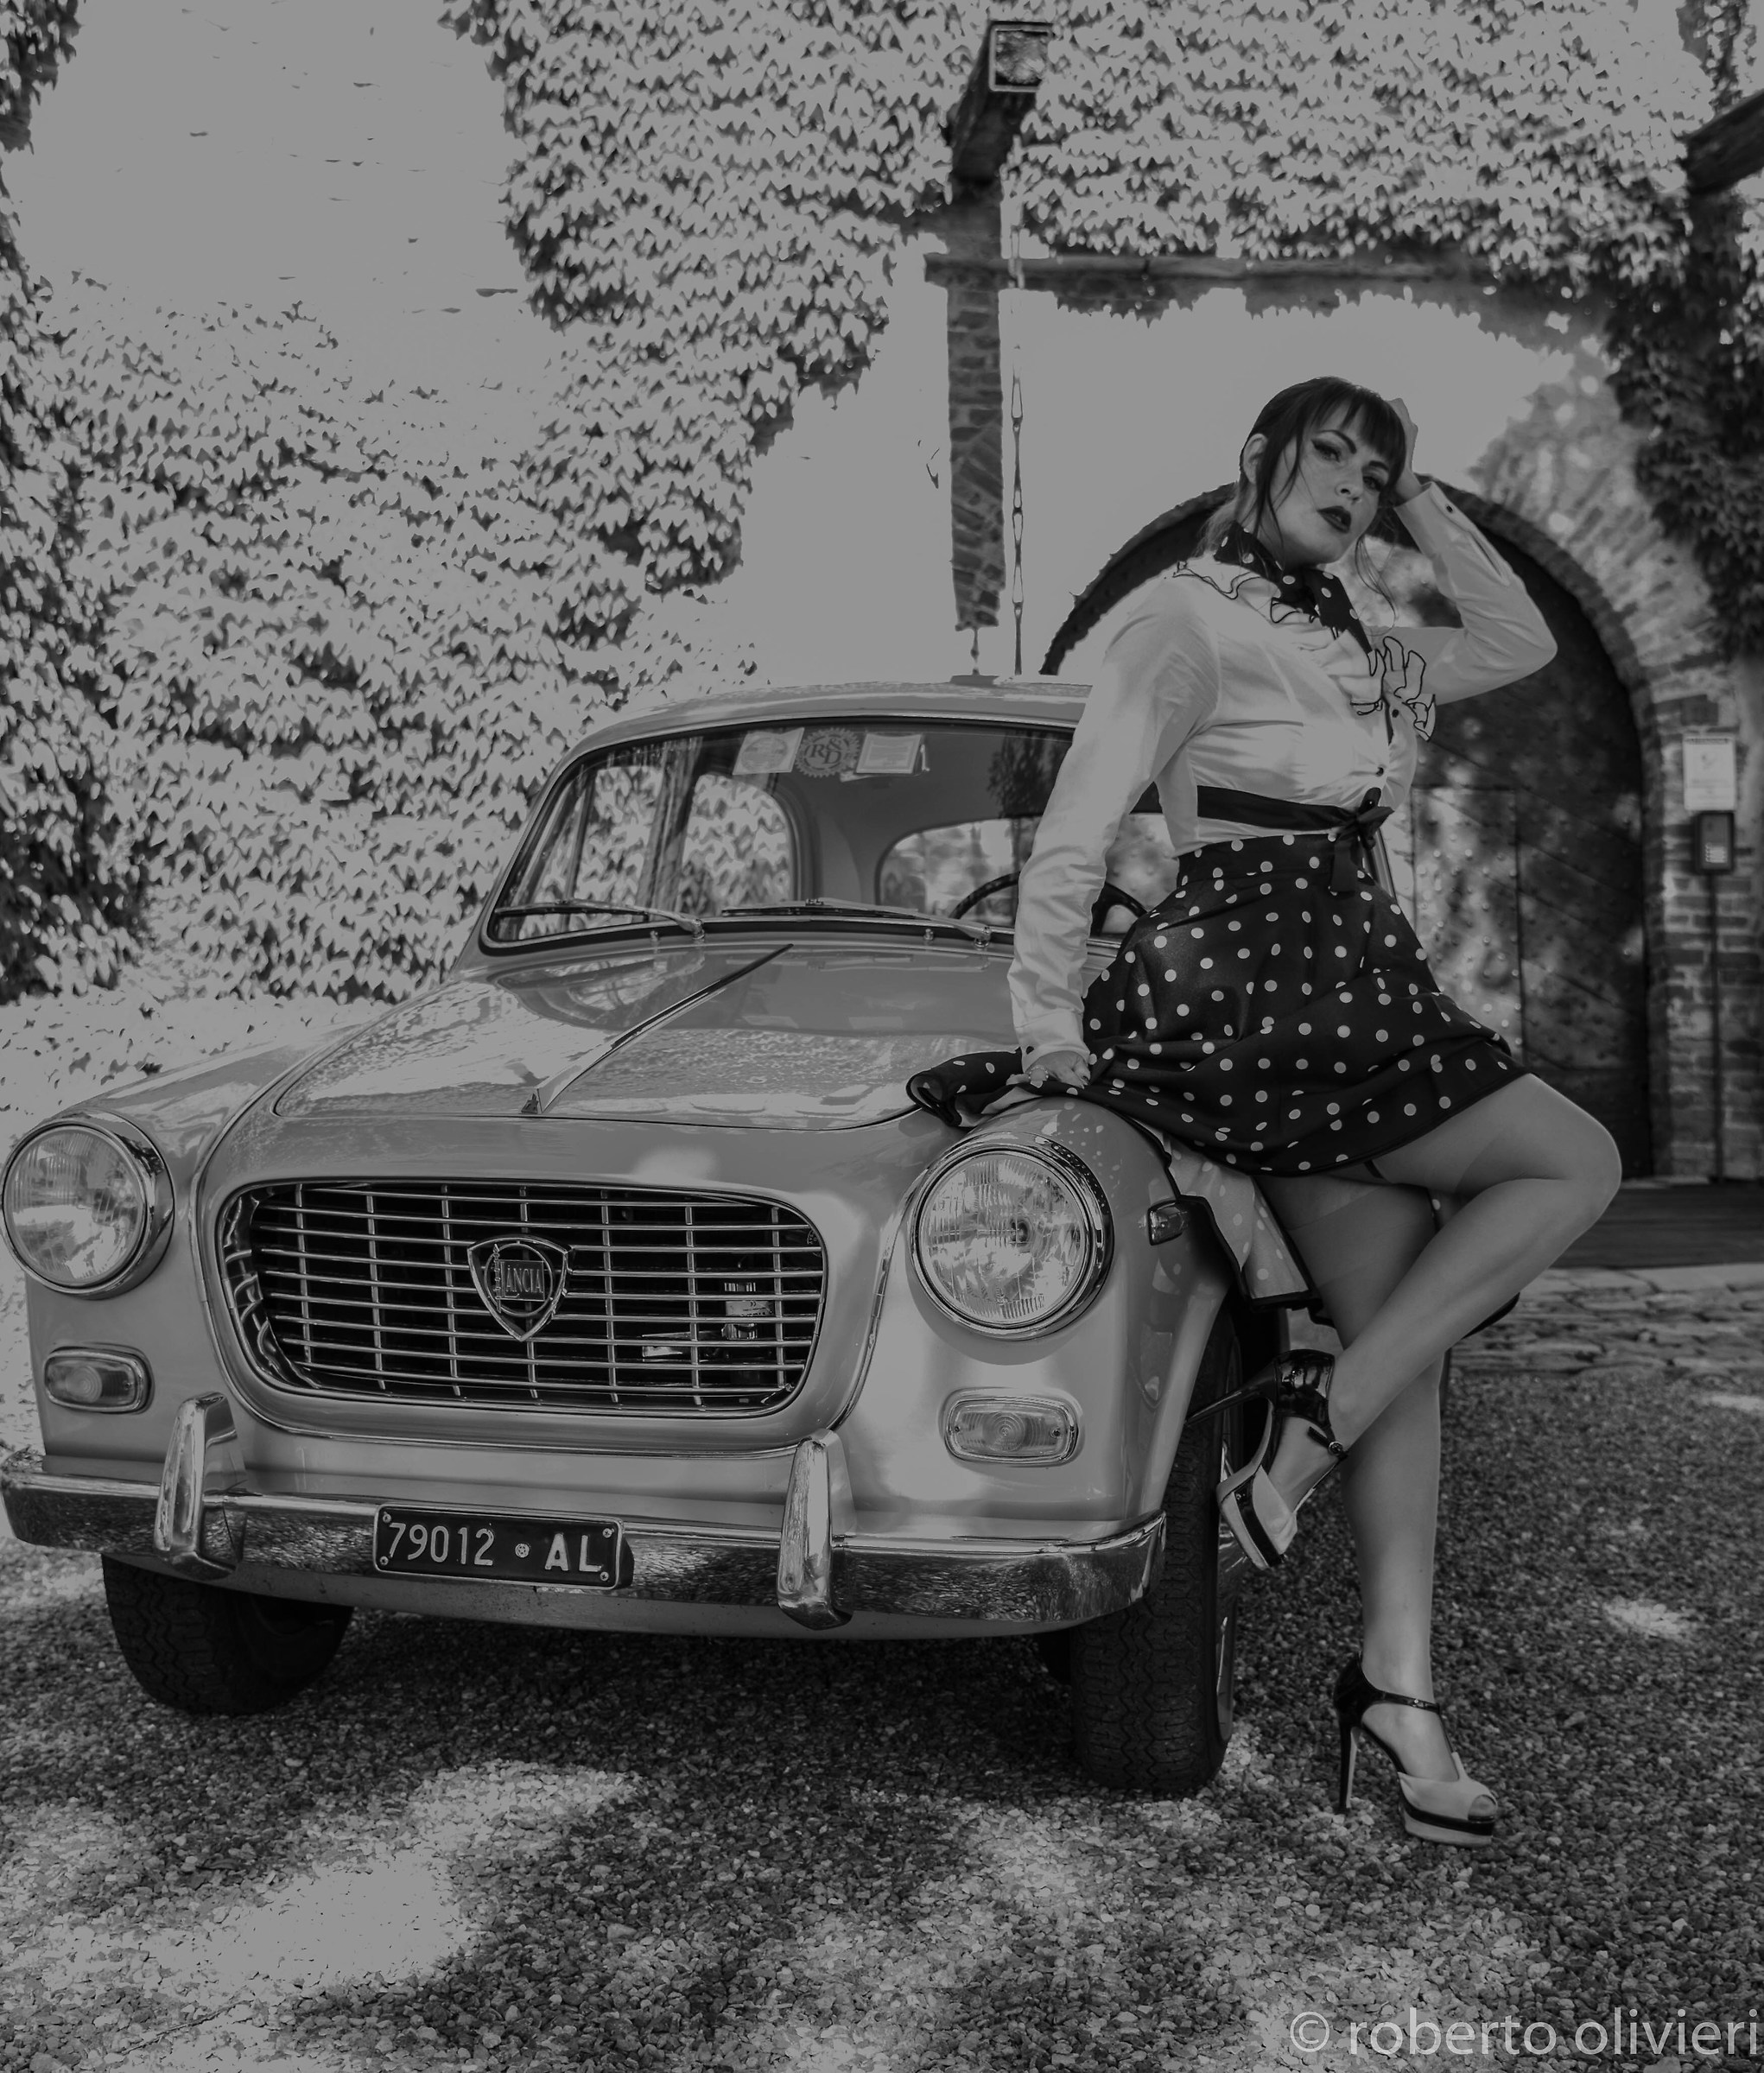 Elisa Joy & Lancia Appia vintage shoot...